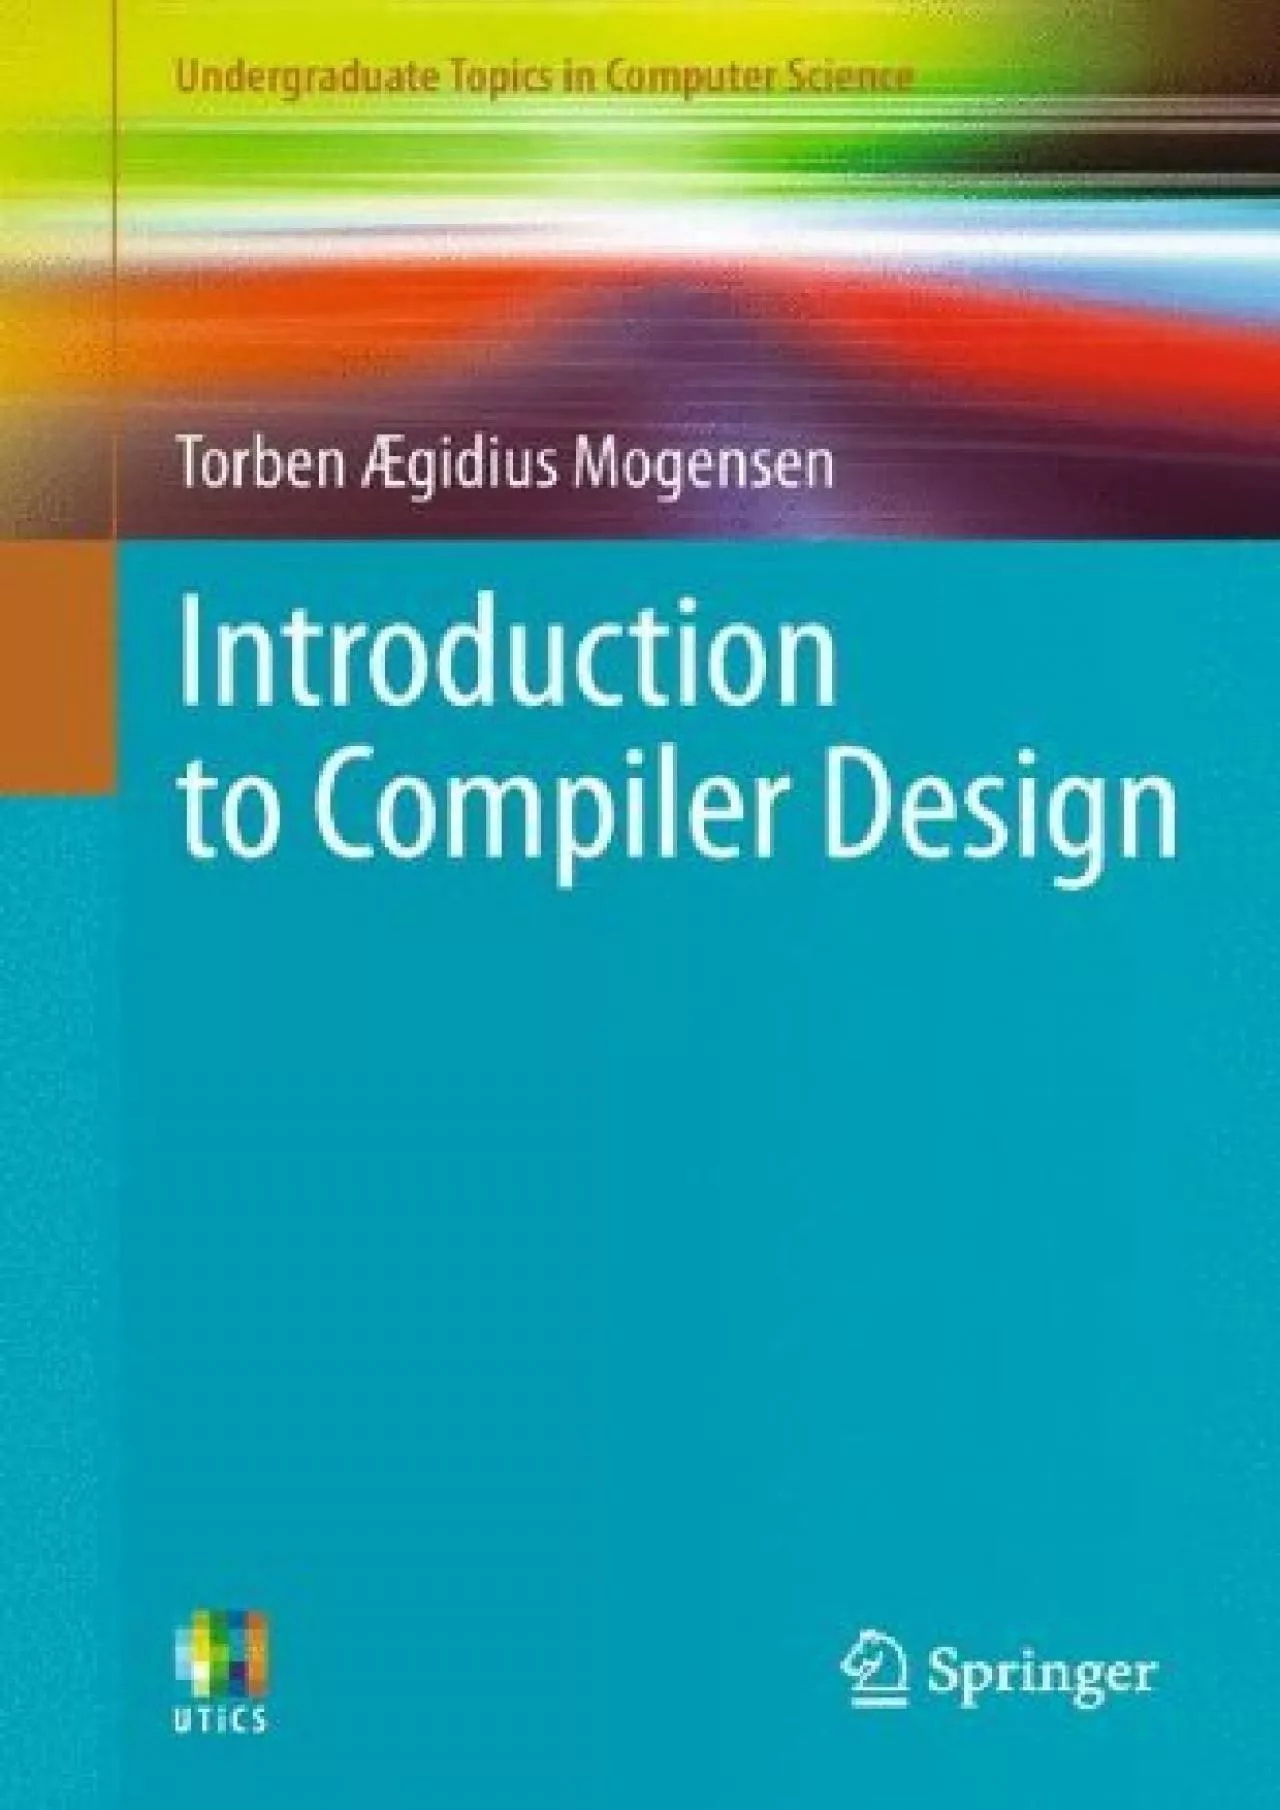 [PDF]-Introduction to Compiler Design (Undergraduate Topics in Computer Science)